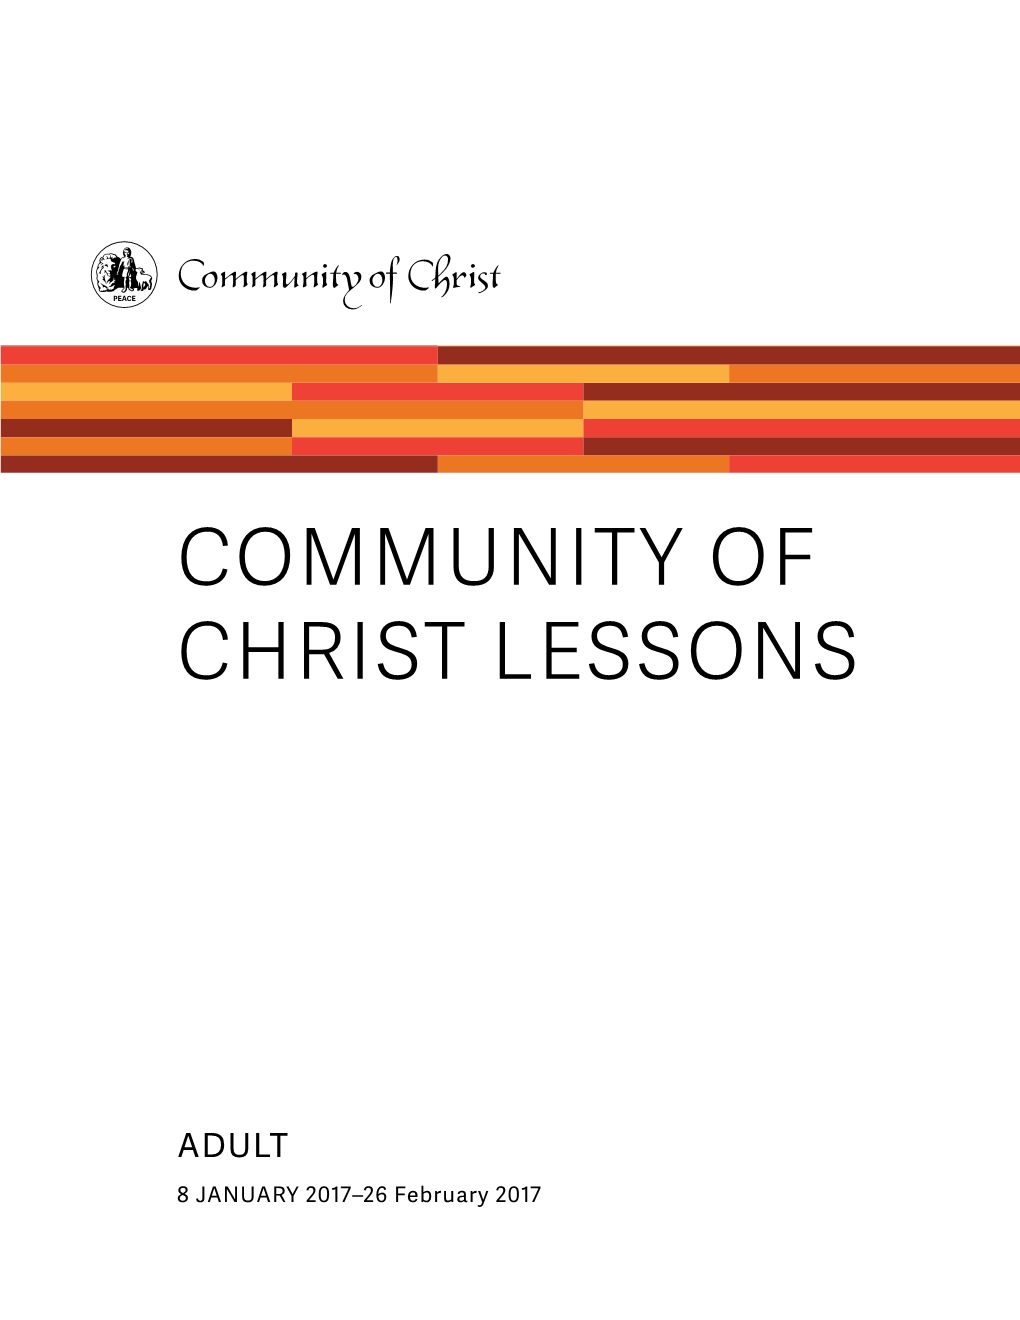 26 February 2017 COMMUNITY of CHRIST LESSONS